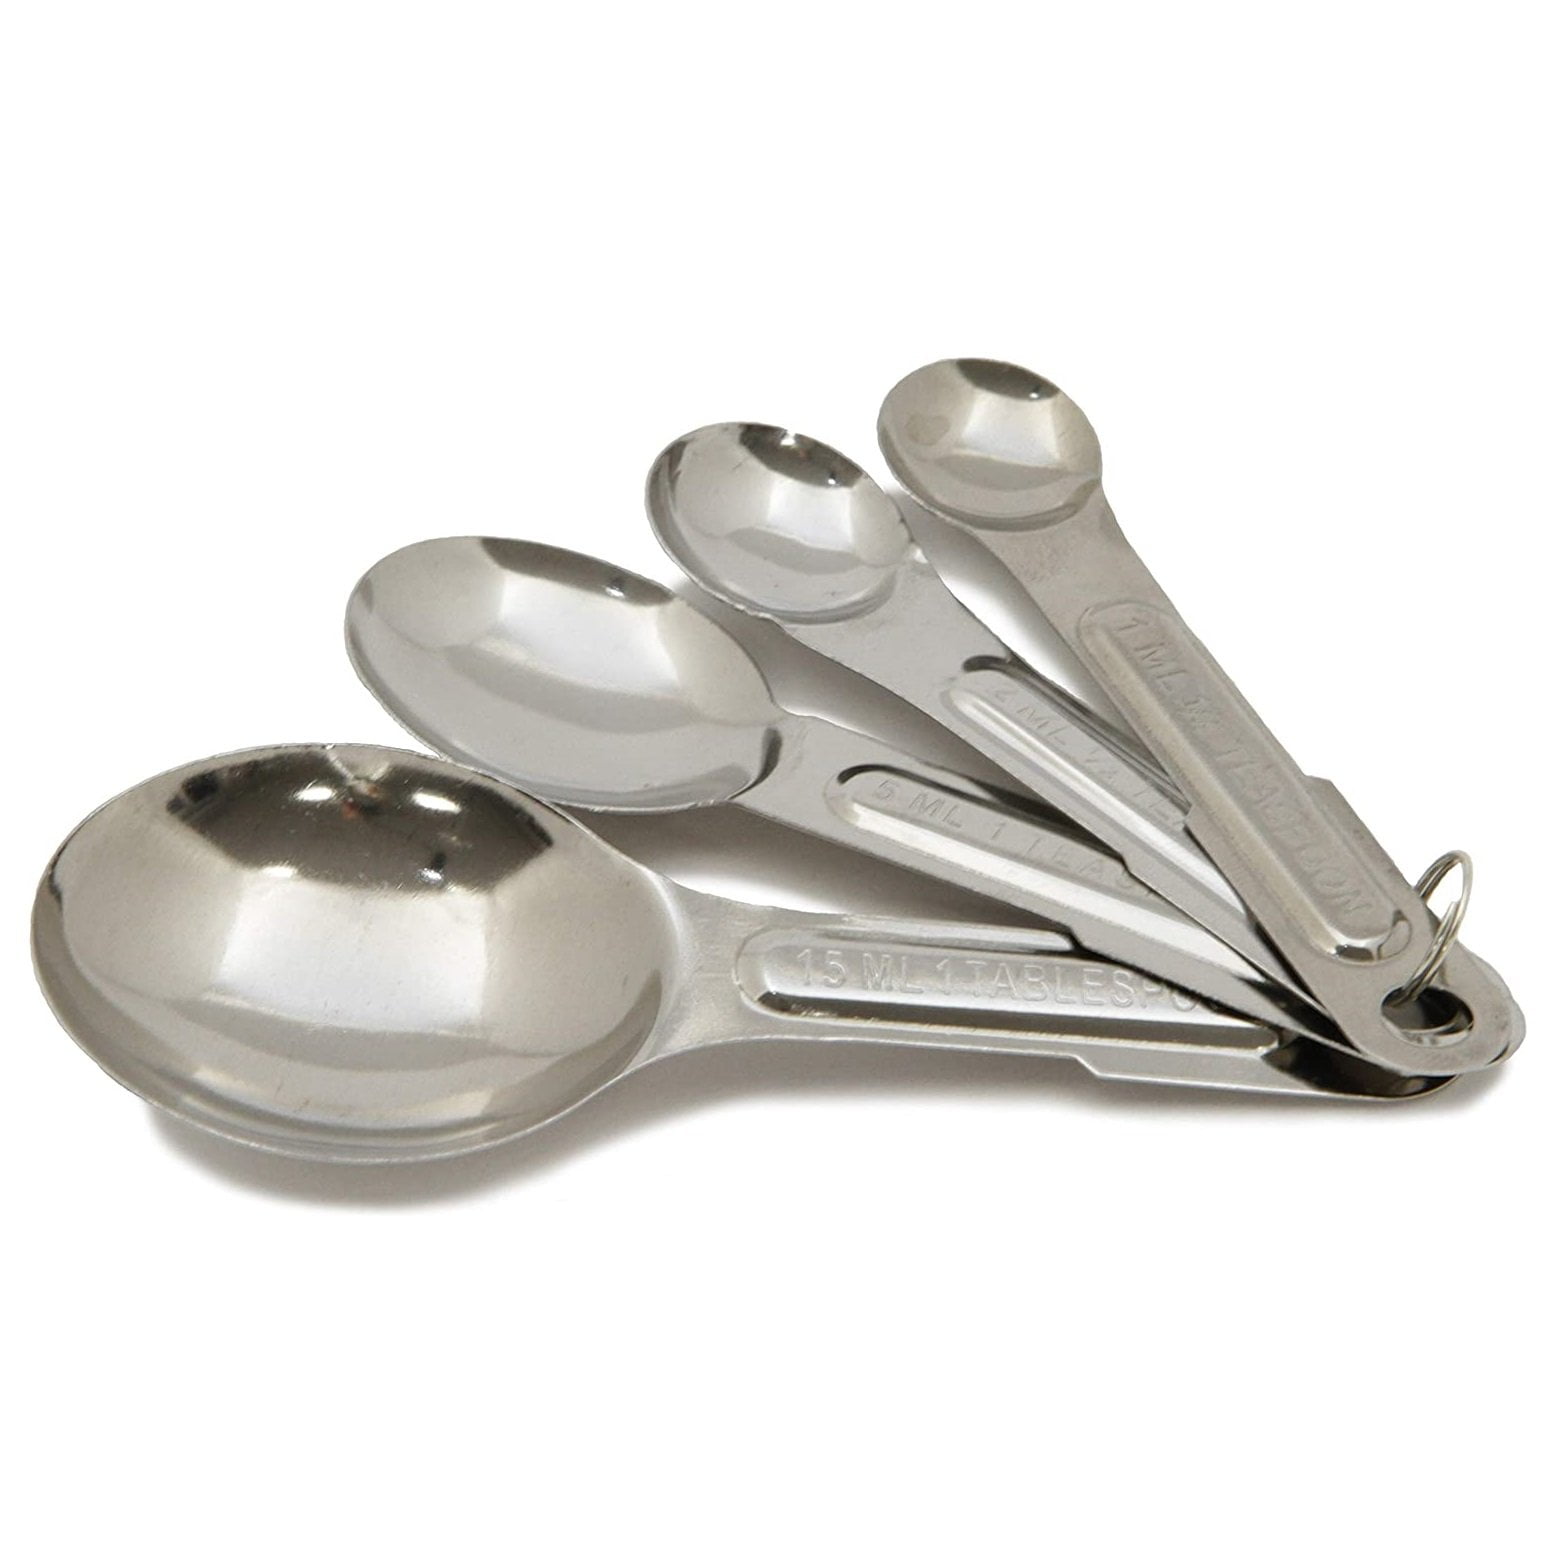 Slofoodgroup Measuring Spoon Set - 6 Piece Stainless Steel Measuring Spoon Set | 304 Stainless Steel Measuring Spoon Set for Cooking Baking and Kitche